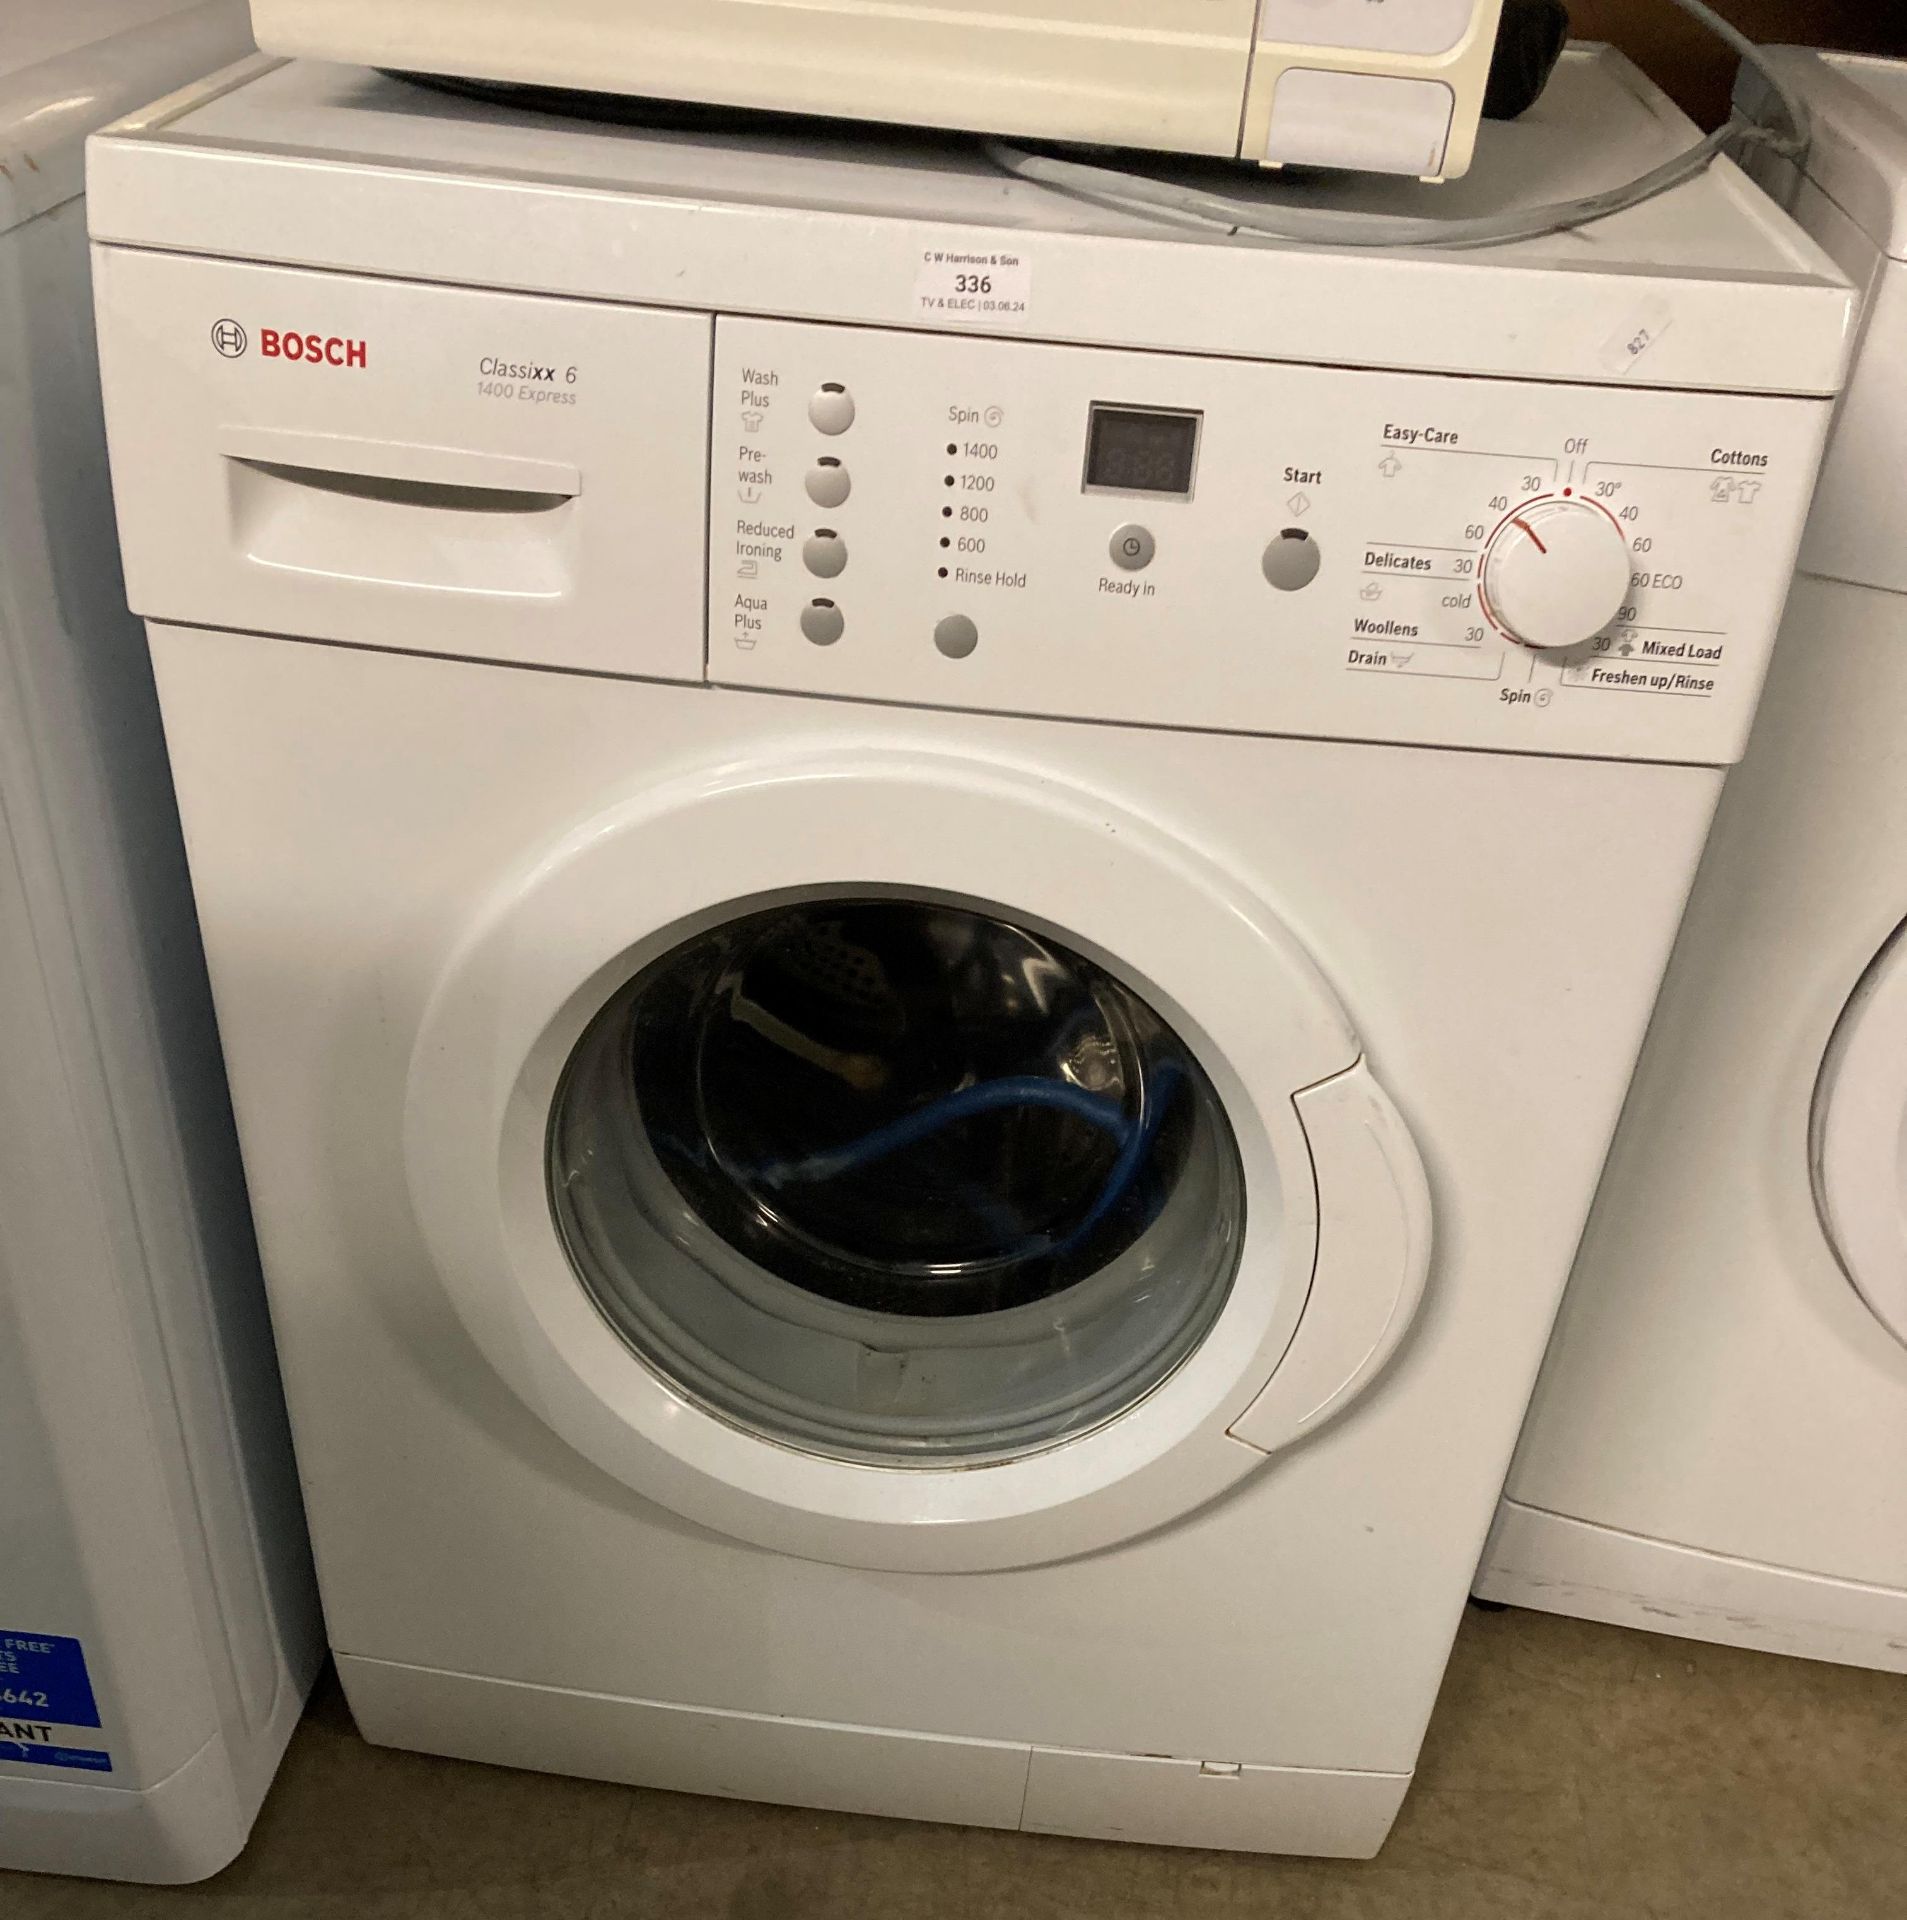 Bosch Classixx 6 1400 Express washing machine (PO)